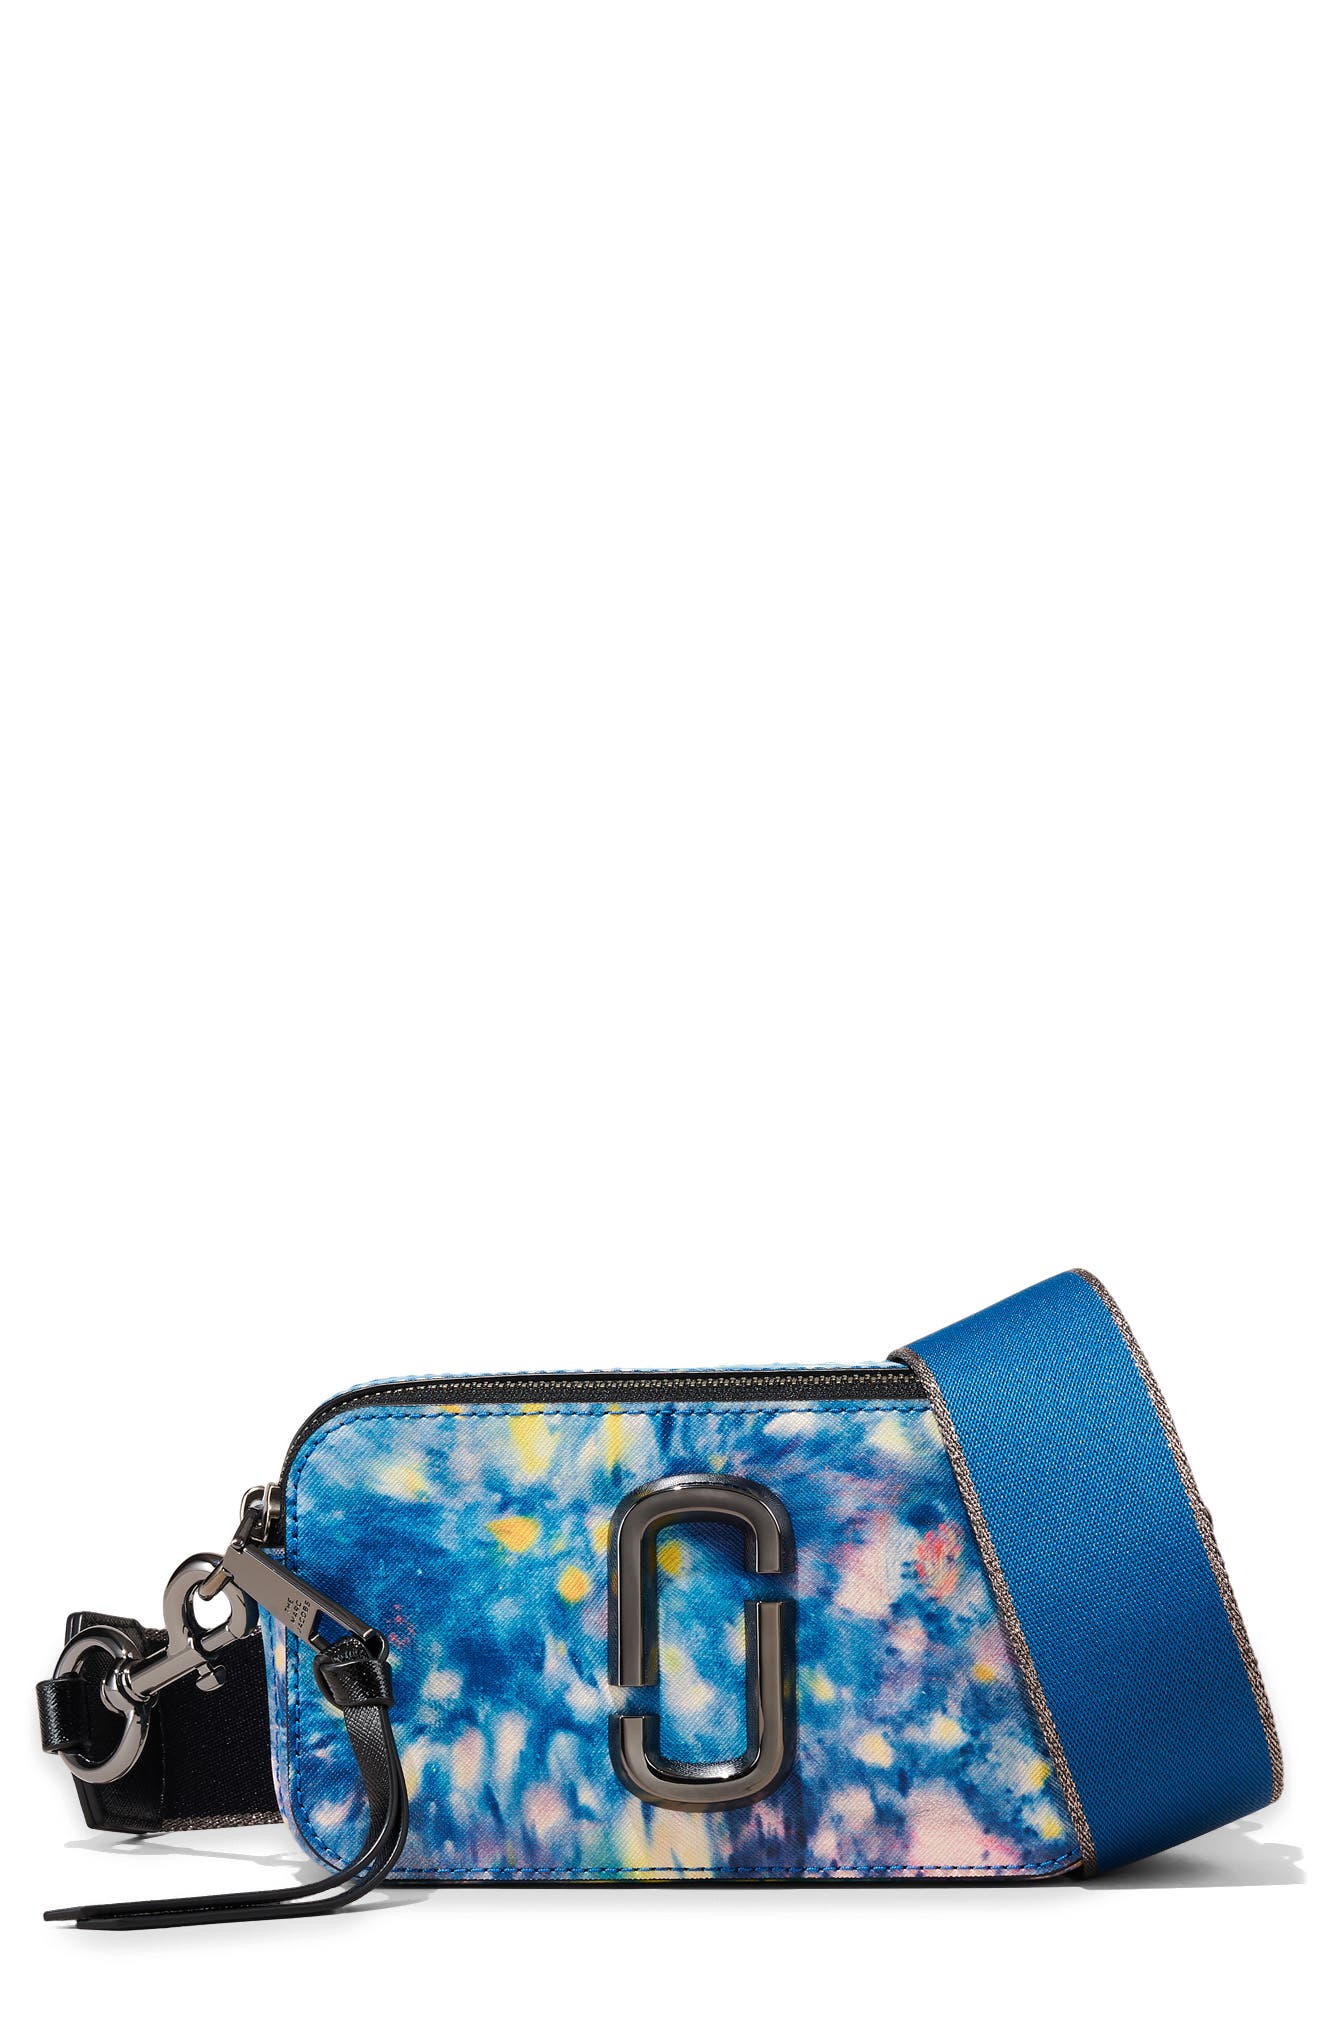 Marc Jacobs Snapshot Crossbody Bag in Blue Multi